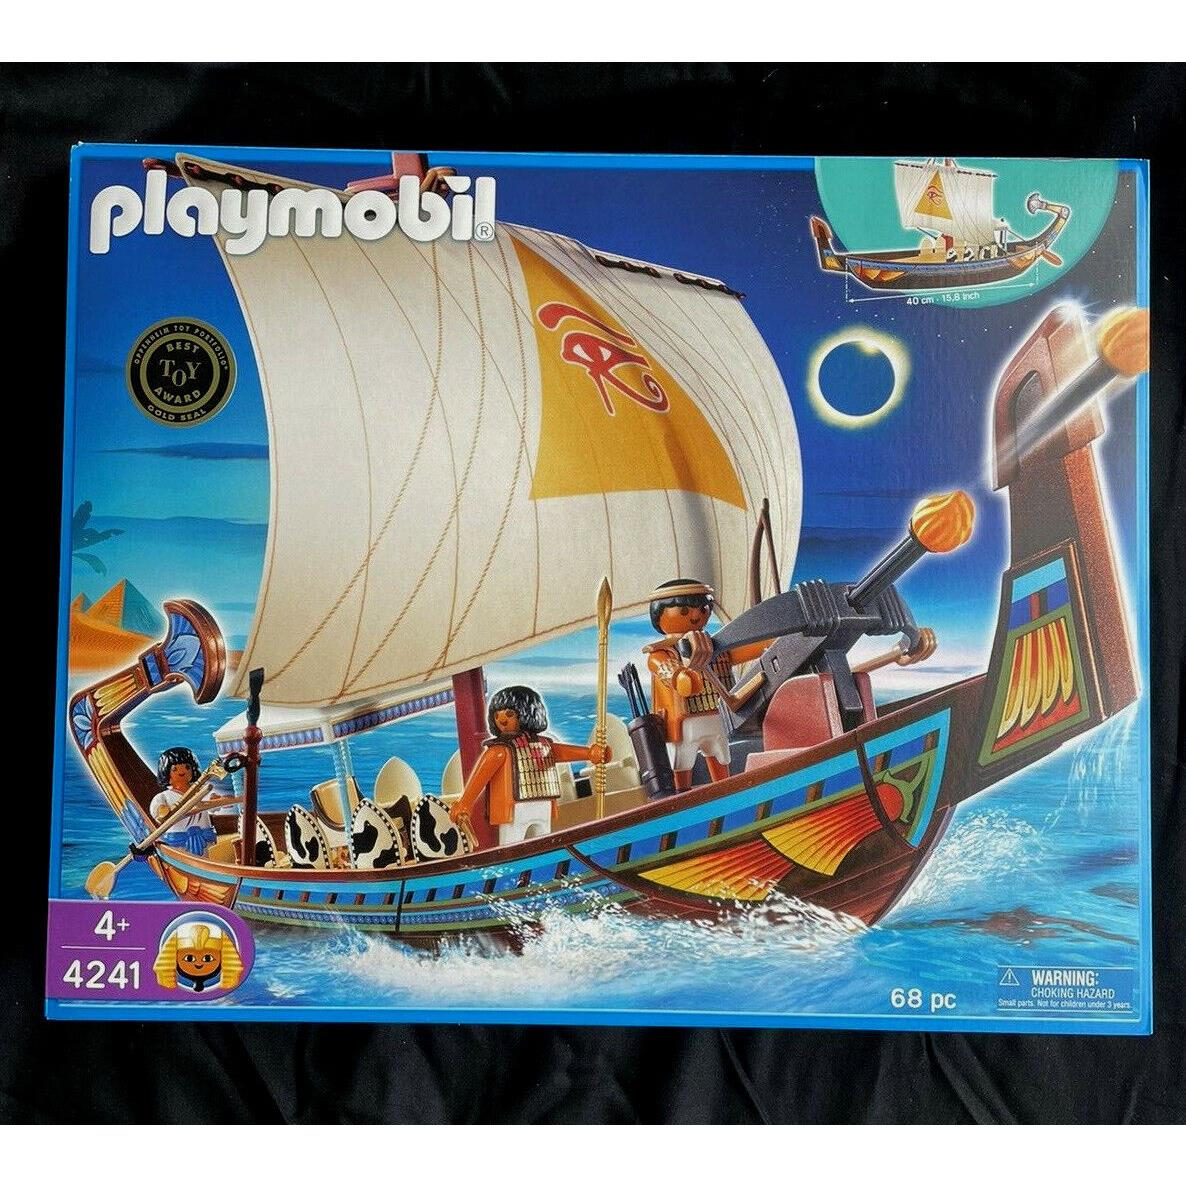 Playmobil 4241 - Royal Ship of Egypt - Vintage Carton-fresh Mint Box `08